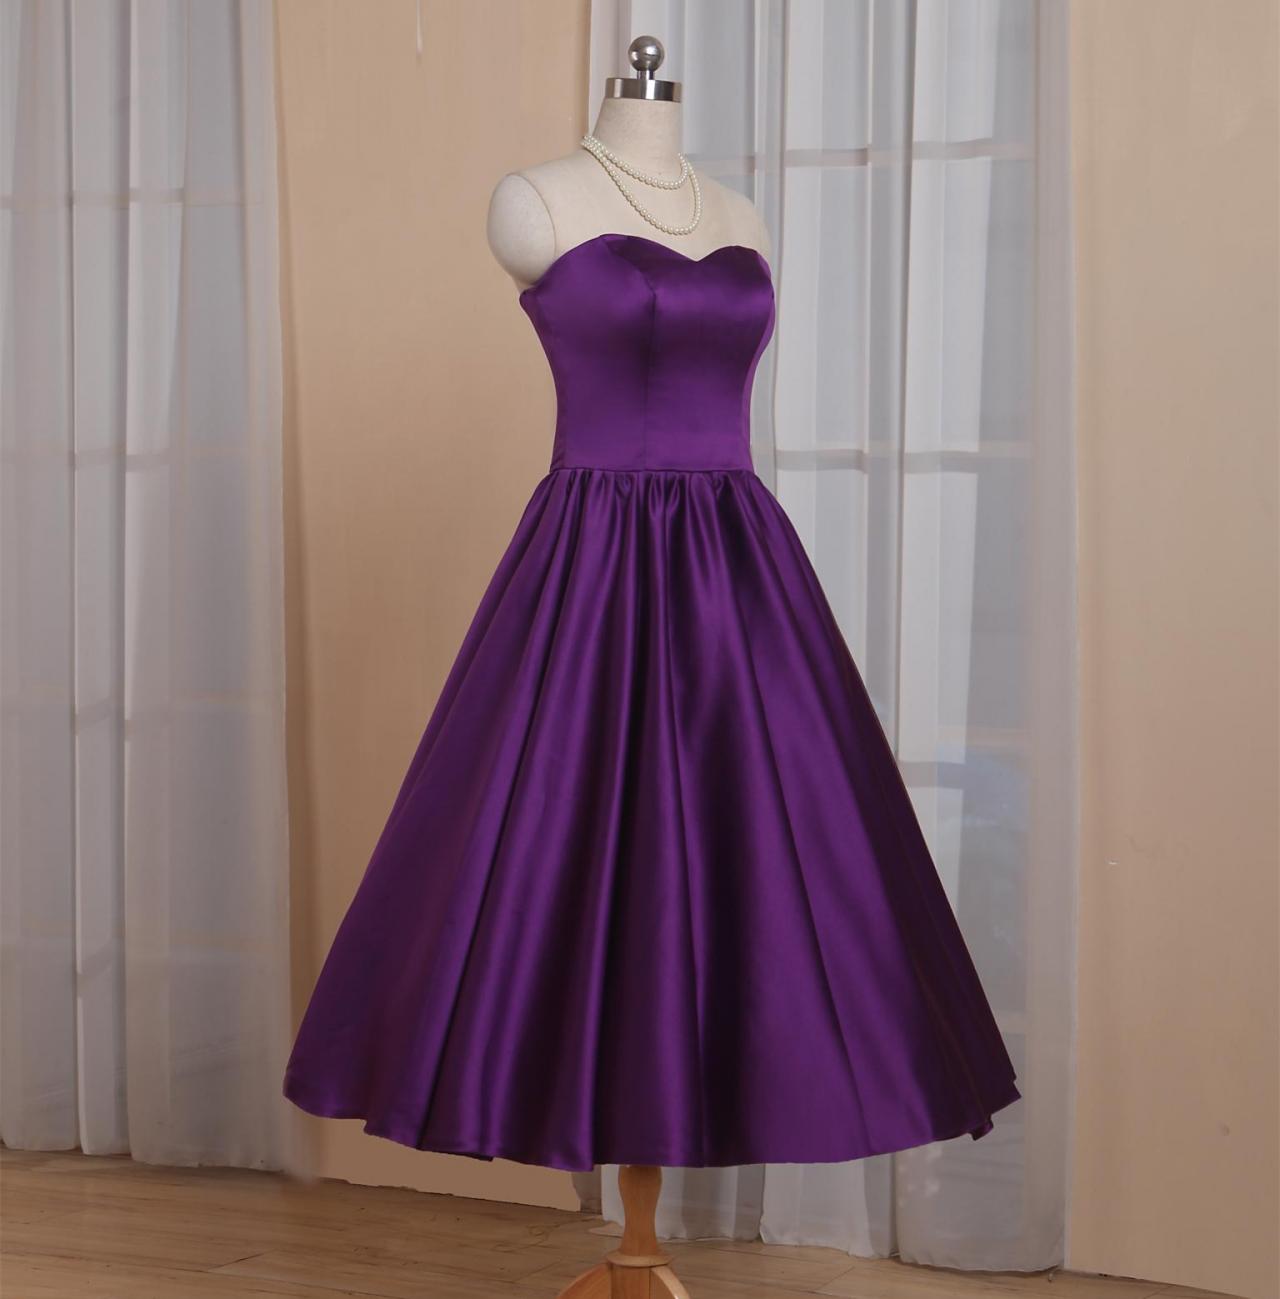 Sweetheart Neckline Tea Length Purple Semi Formal Occasion Dress Hoco Party Dress